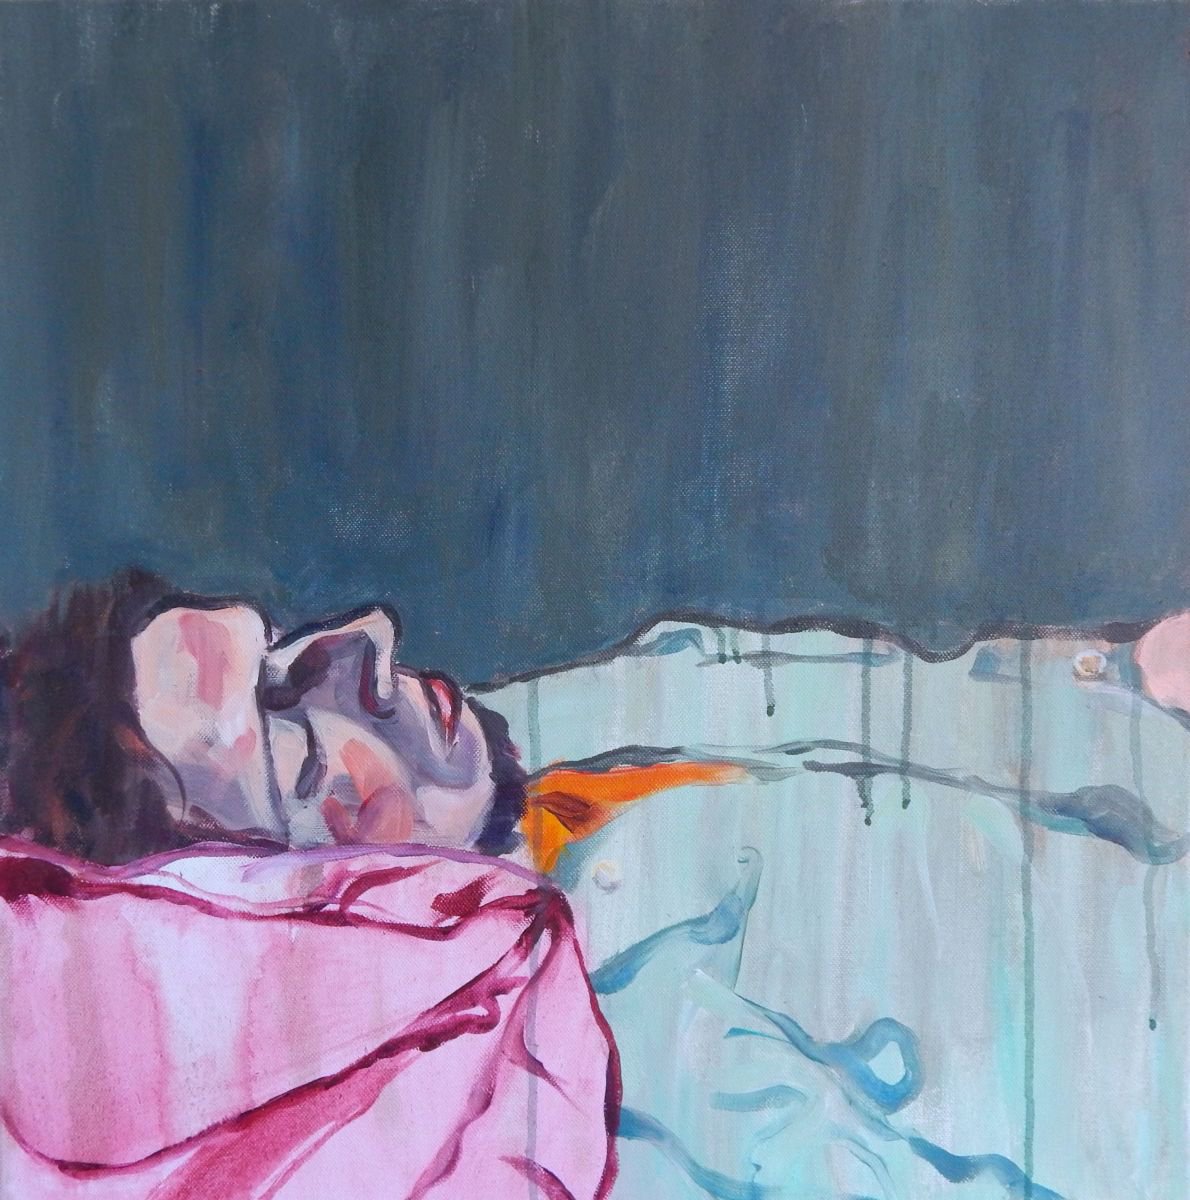 The Sleeping Storyteller by Sheri Gee